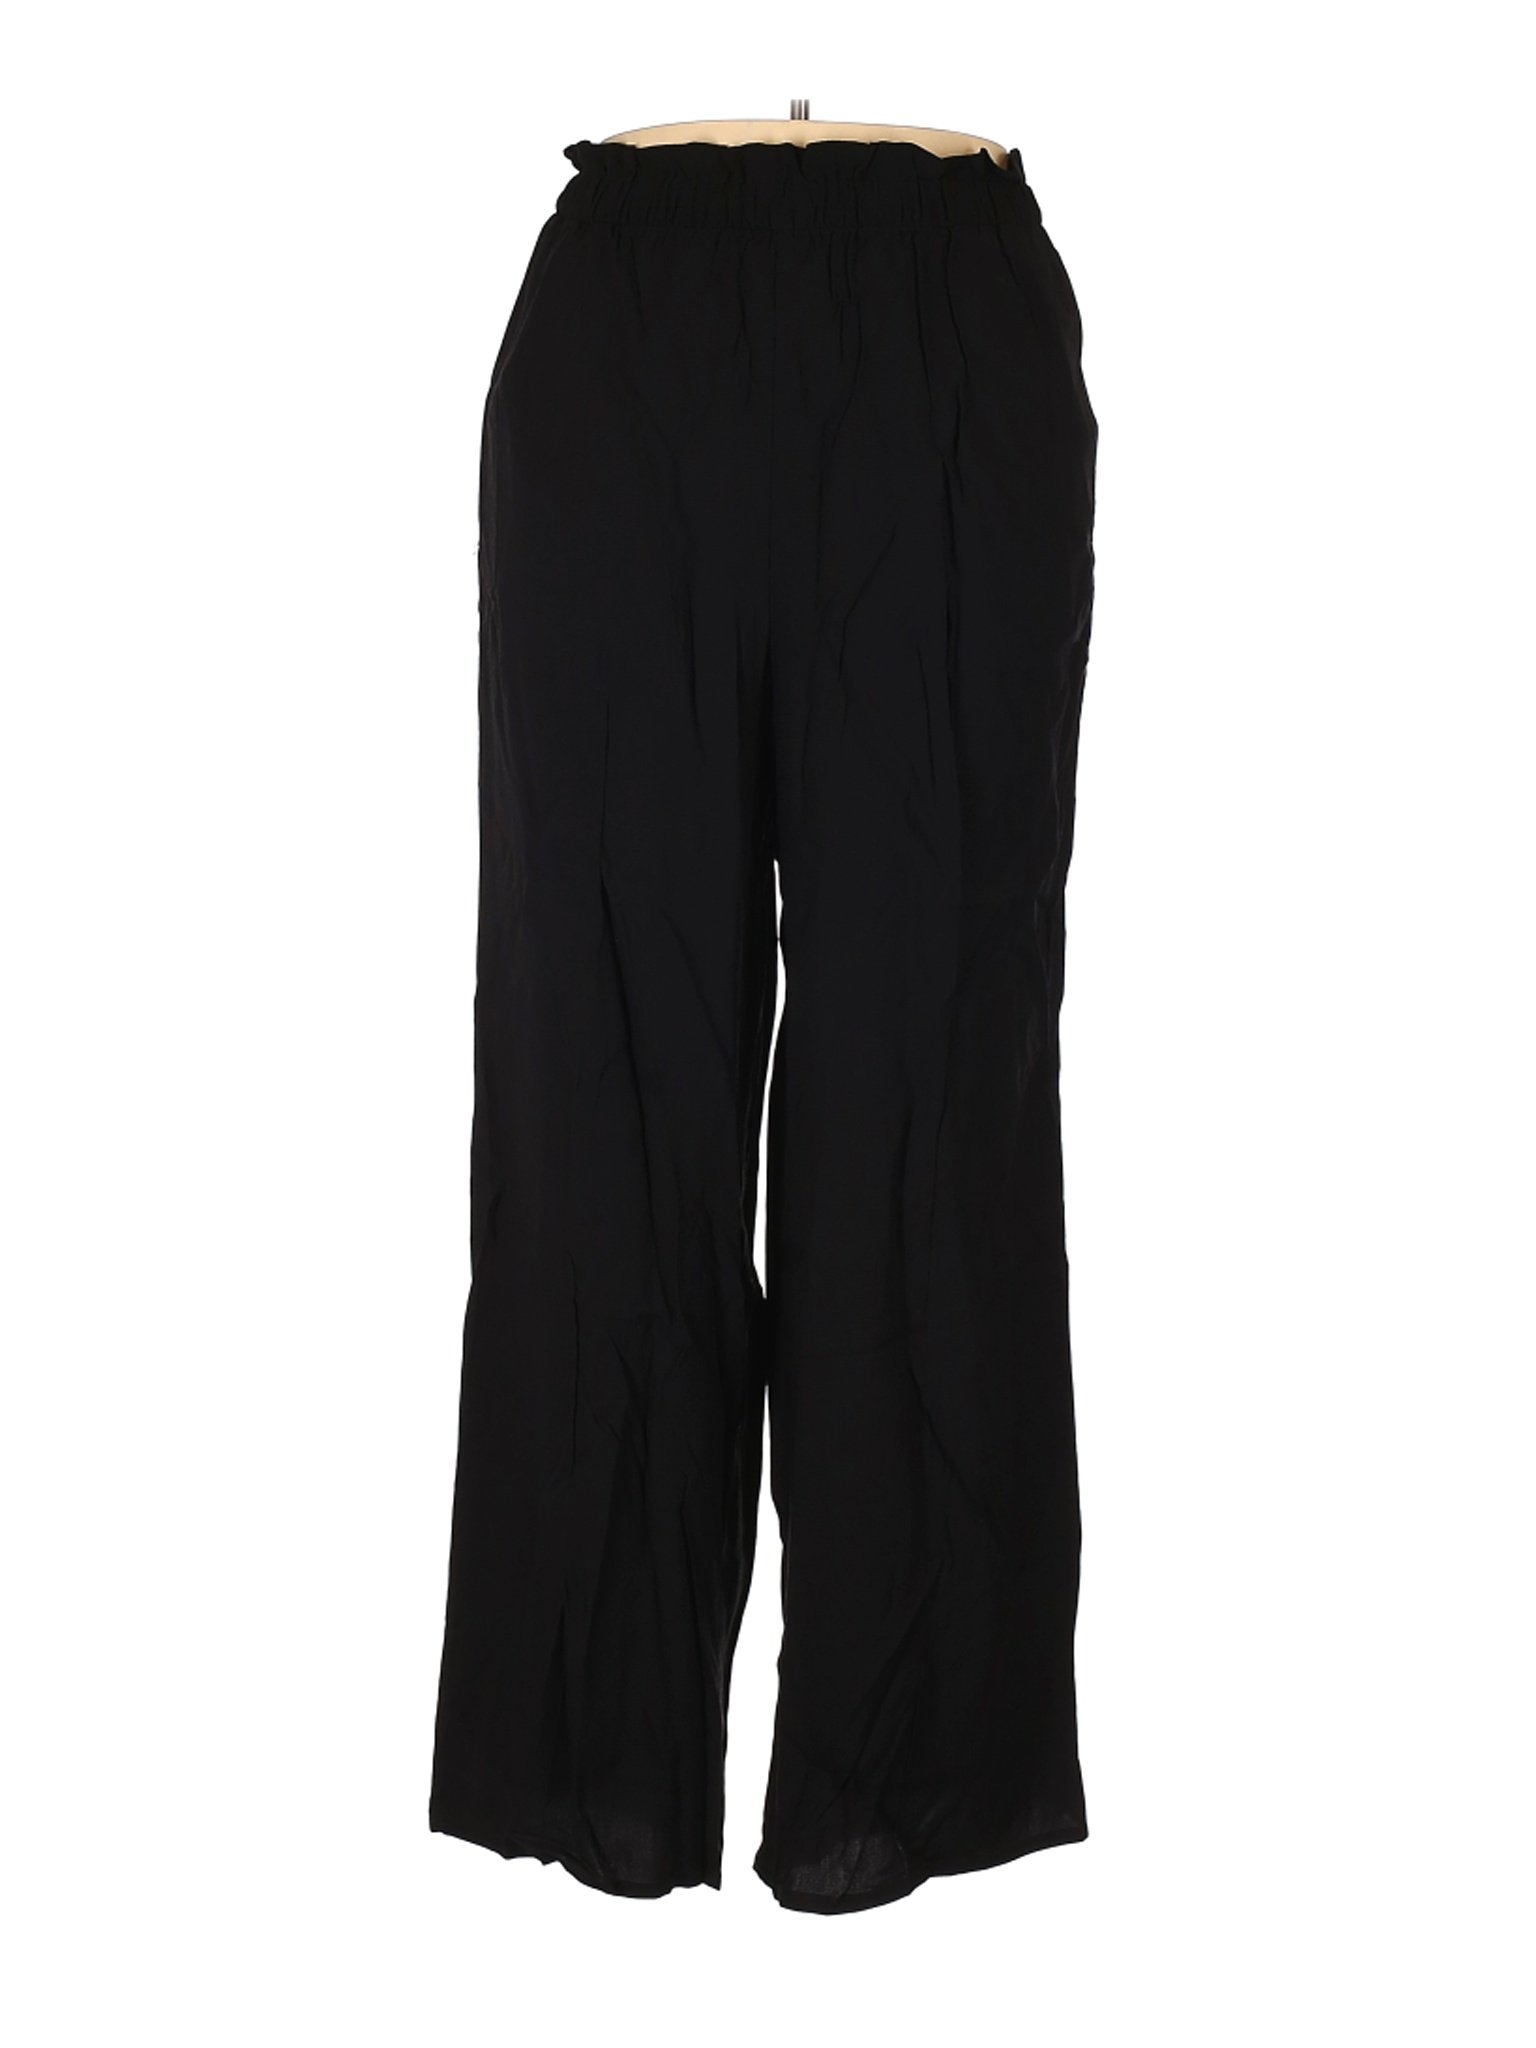 H&M Women Black Casual Pants 16 | eBay